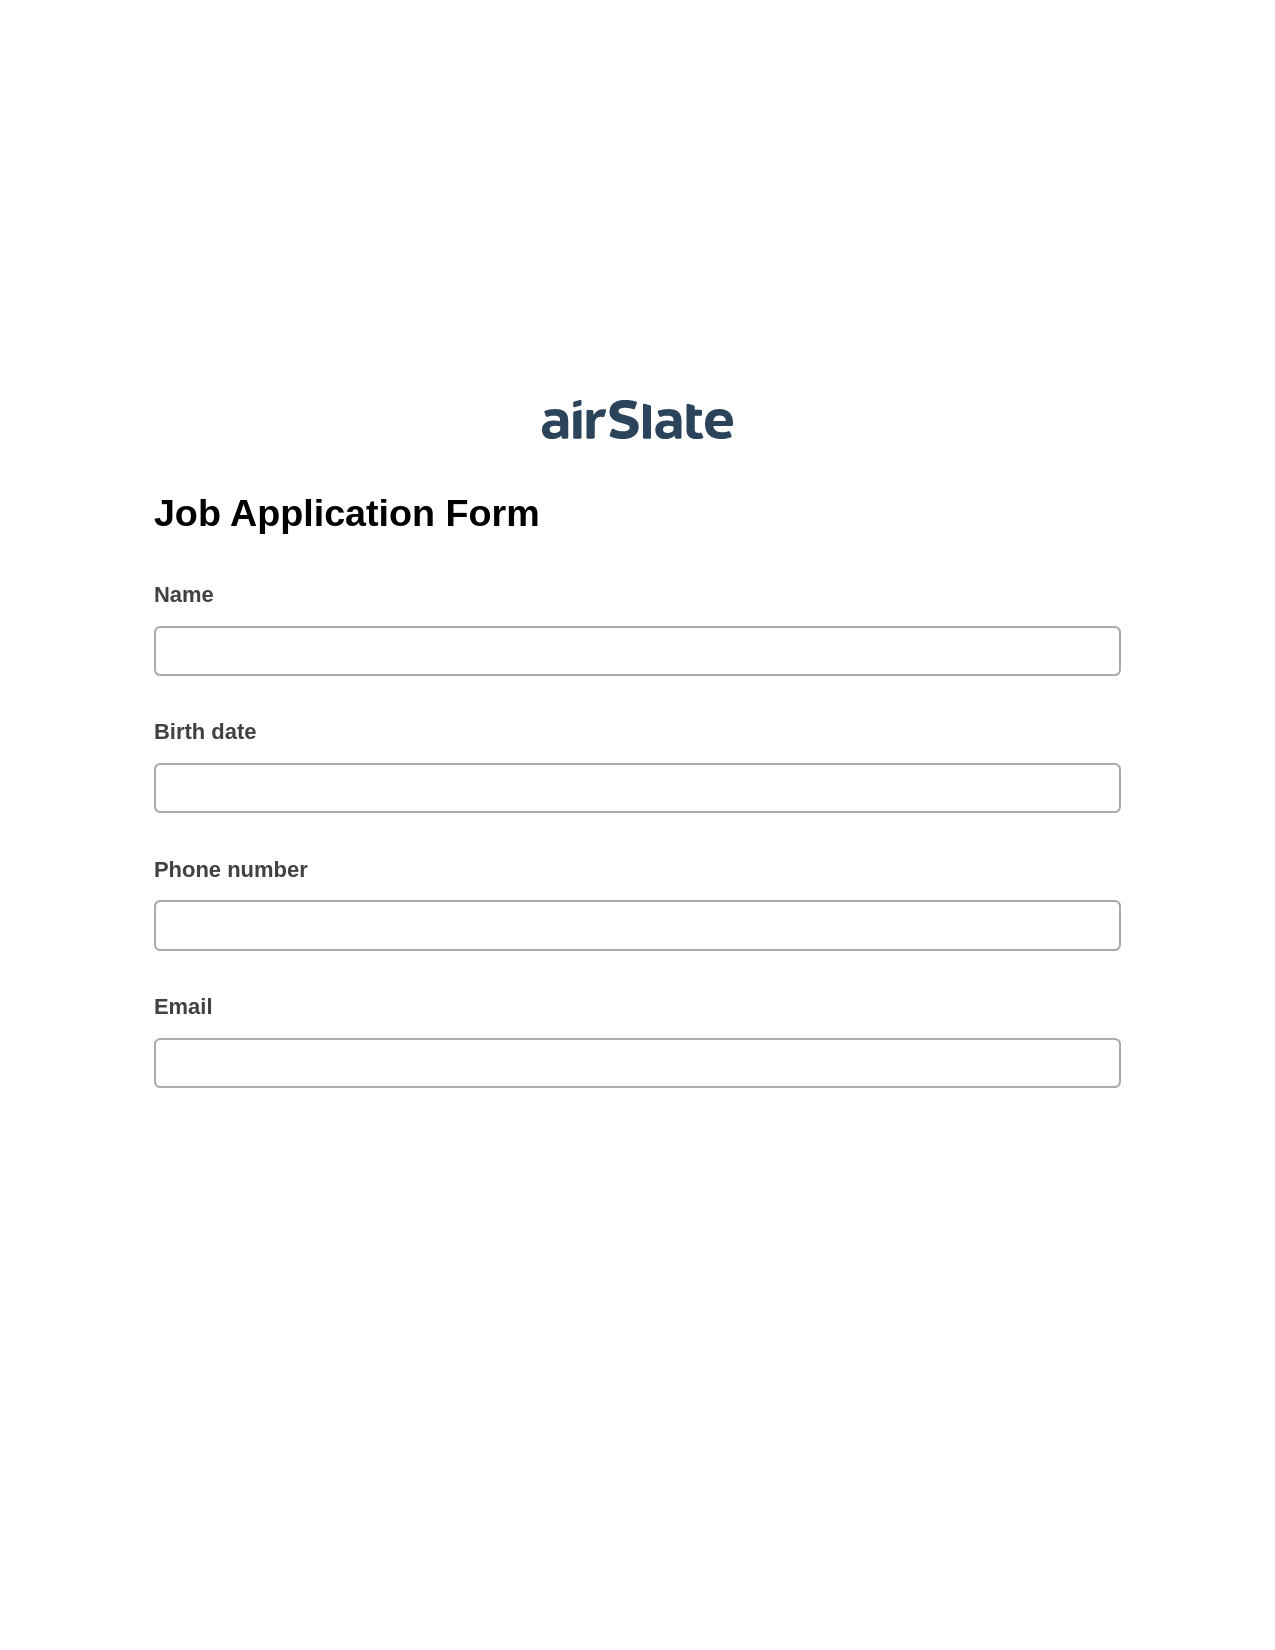 Job Application Form Pre-fill from Google Sheet Dropdown Options Bot, Create slate bot, Slack Two-Way Binding Bot